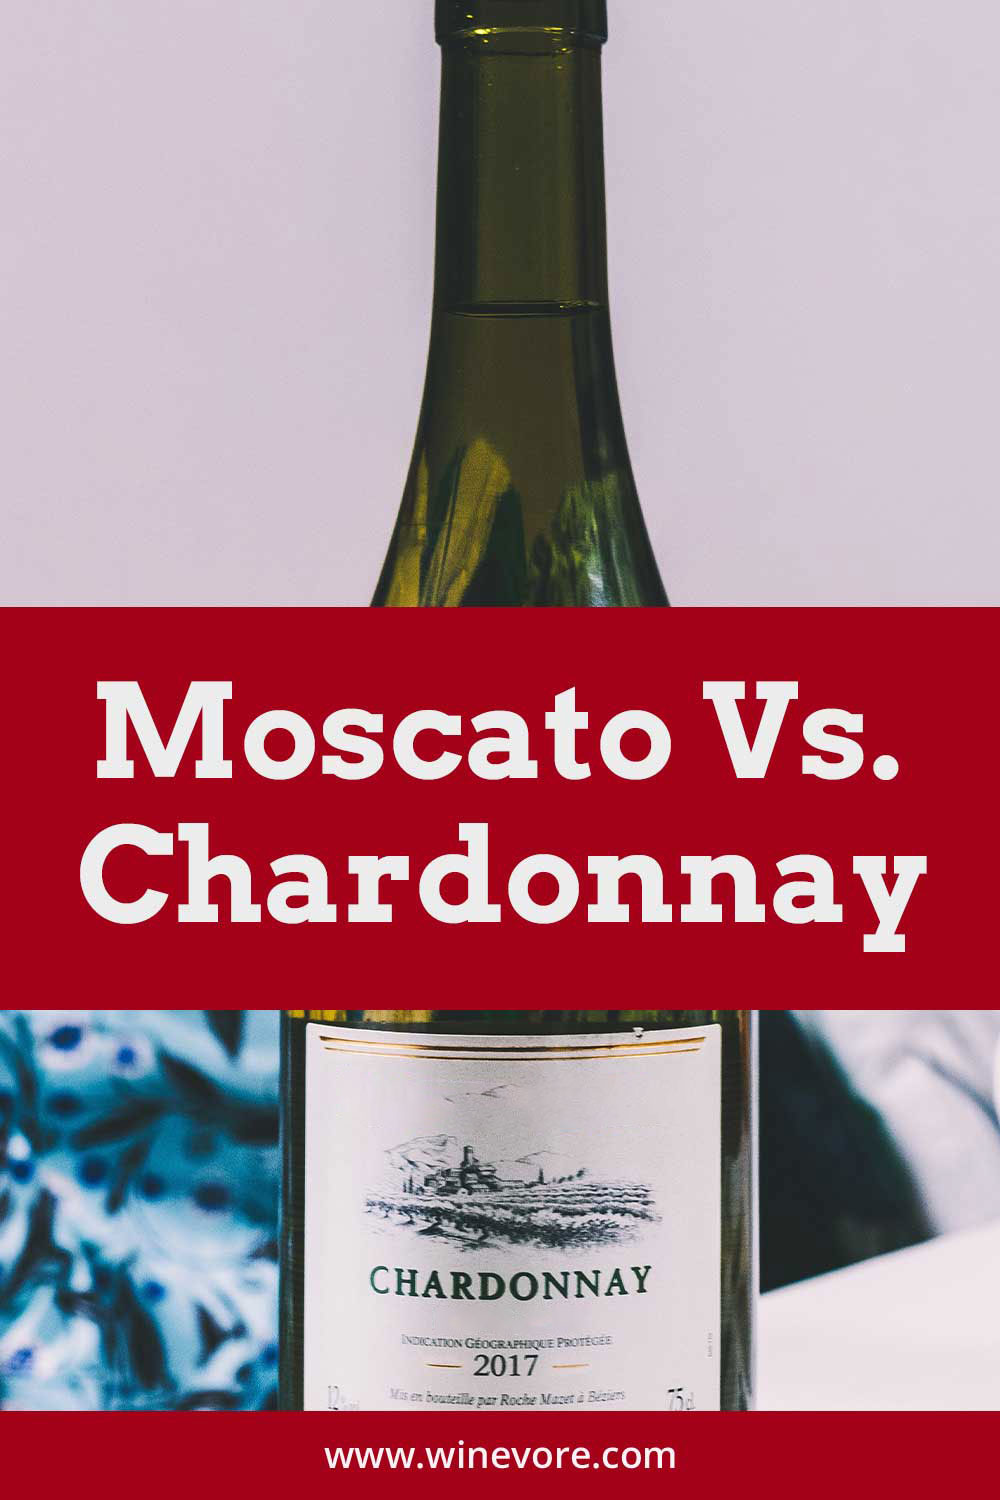 A bottle of chardonnay - Moscato Vs Chardonnay